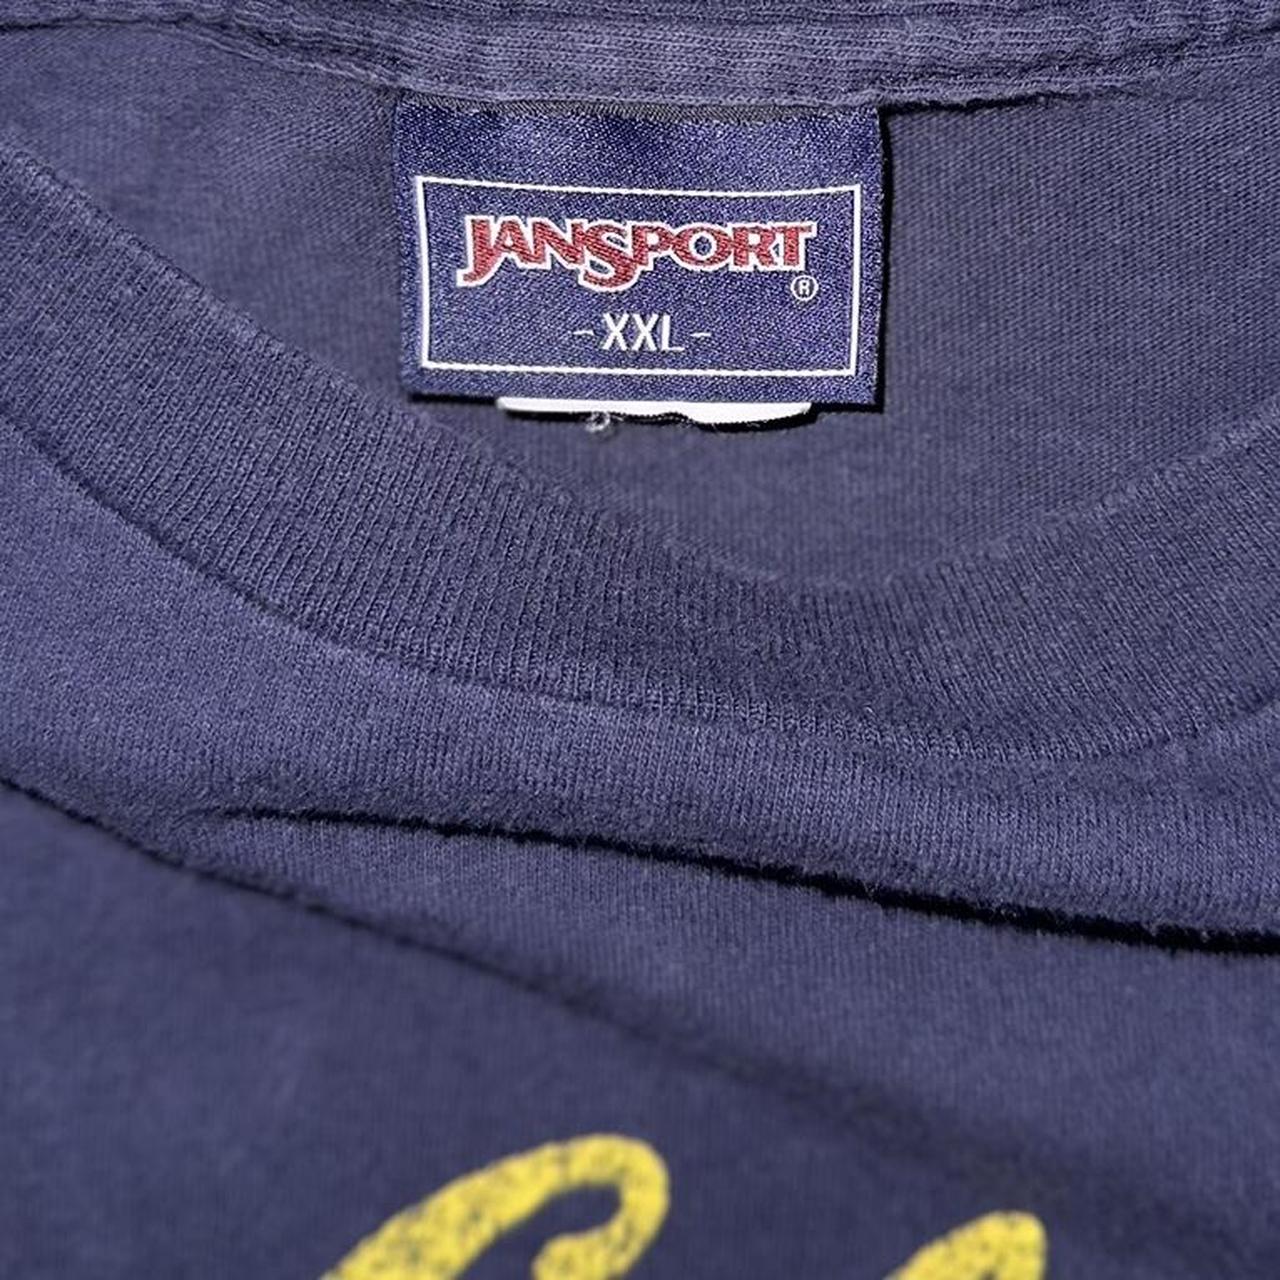 Jansport Men's Navy and Yellow T-shirt | Depop